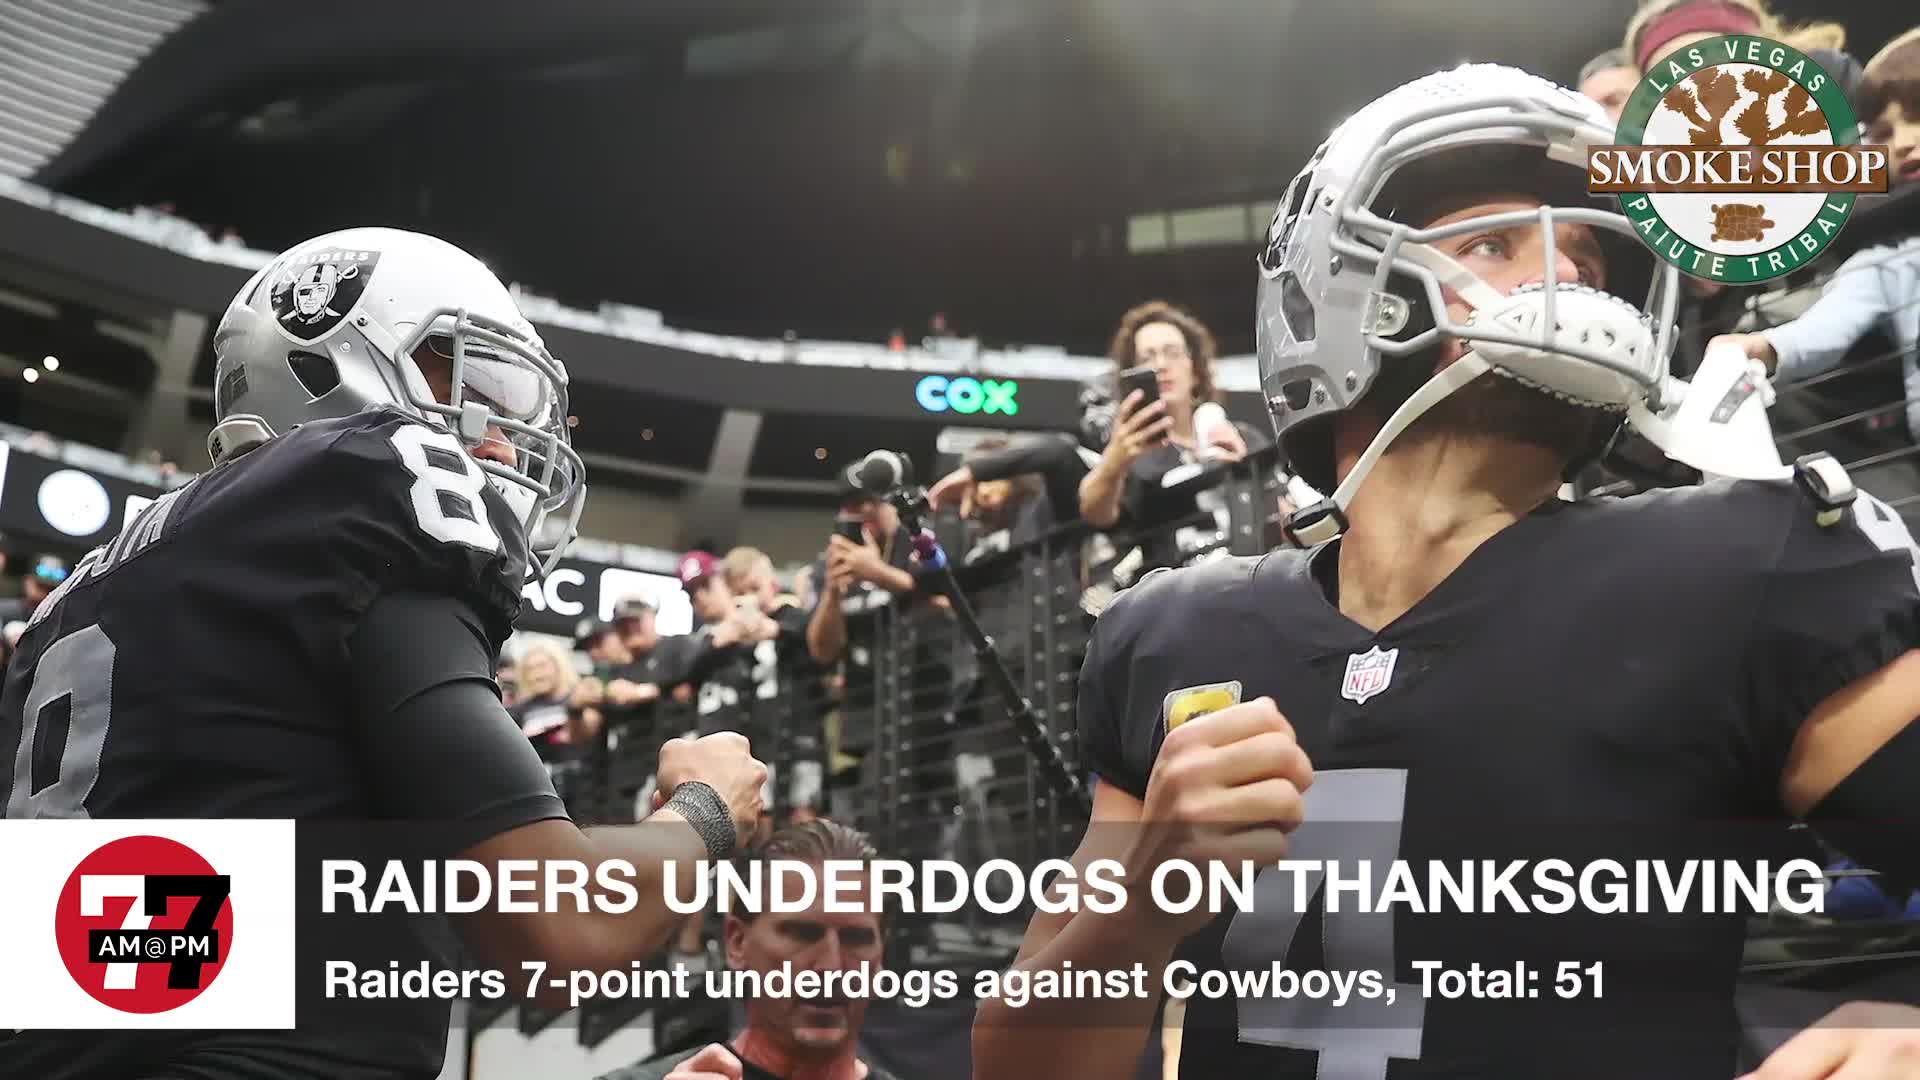 7@7PM Raiders Underdogs on Thanksgiving